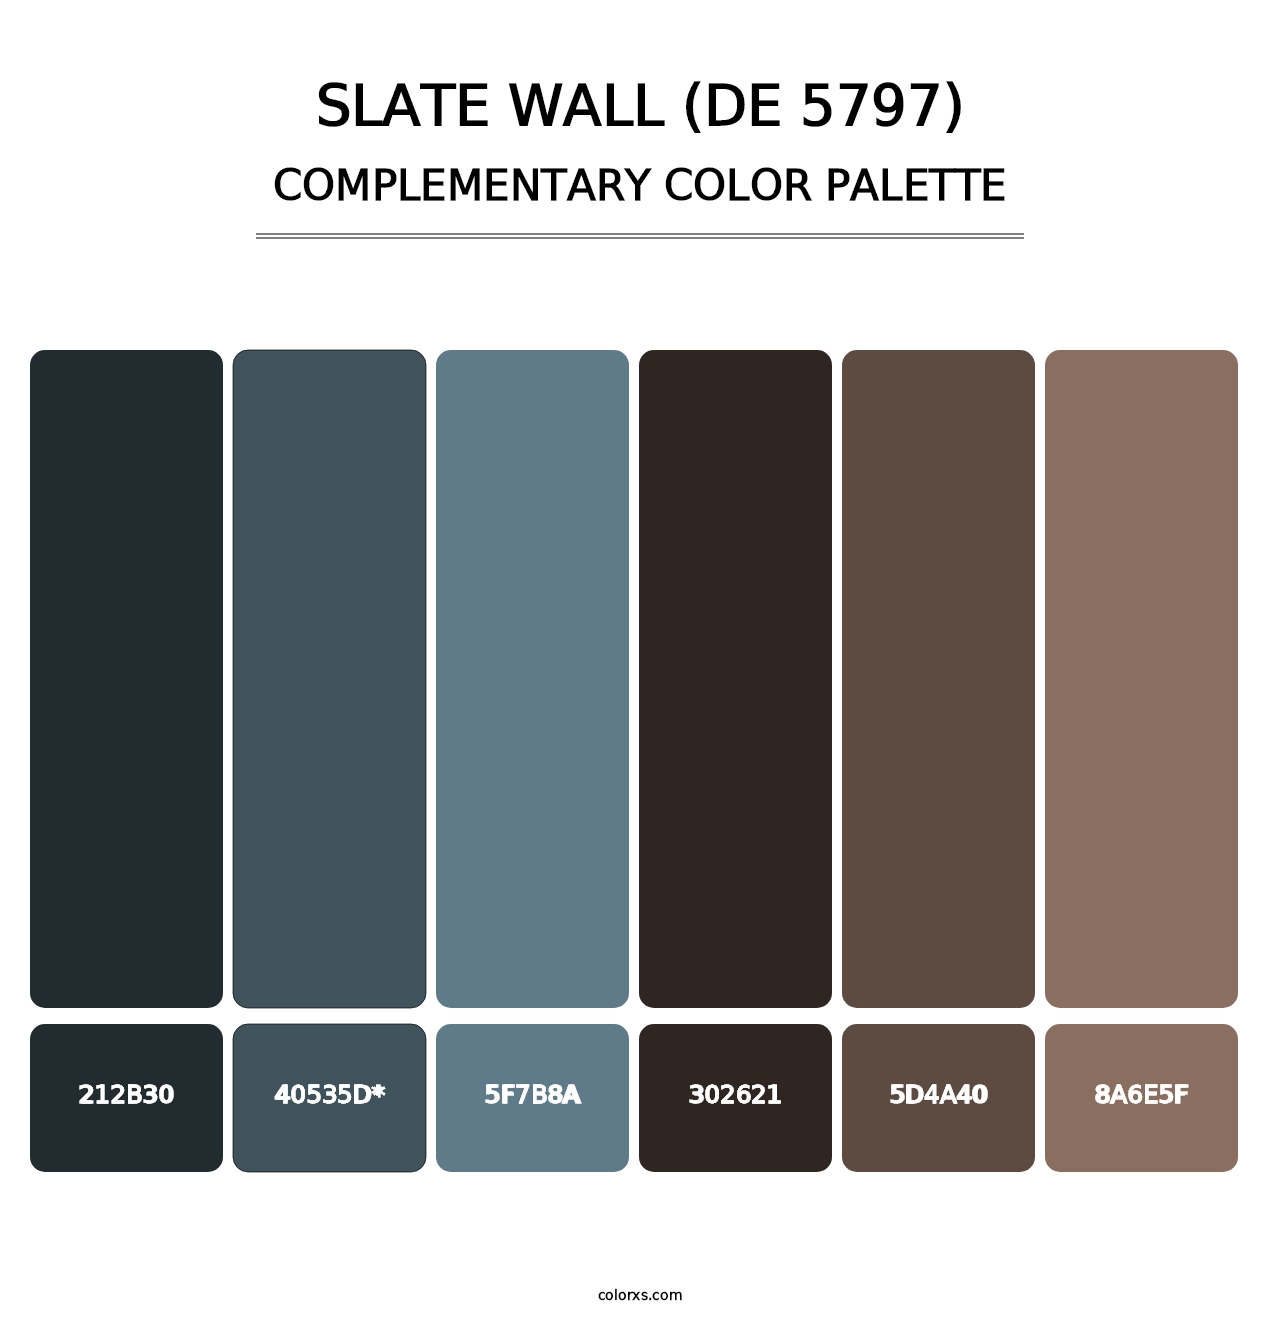 Slate Wall (DE 5797) - Complementary Color Palette